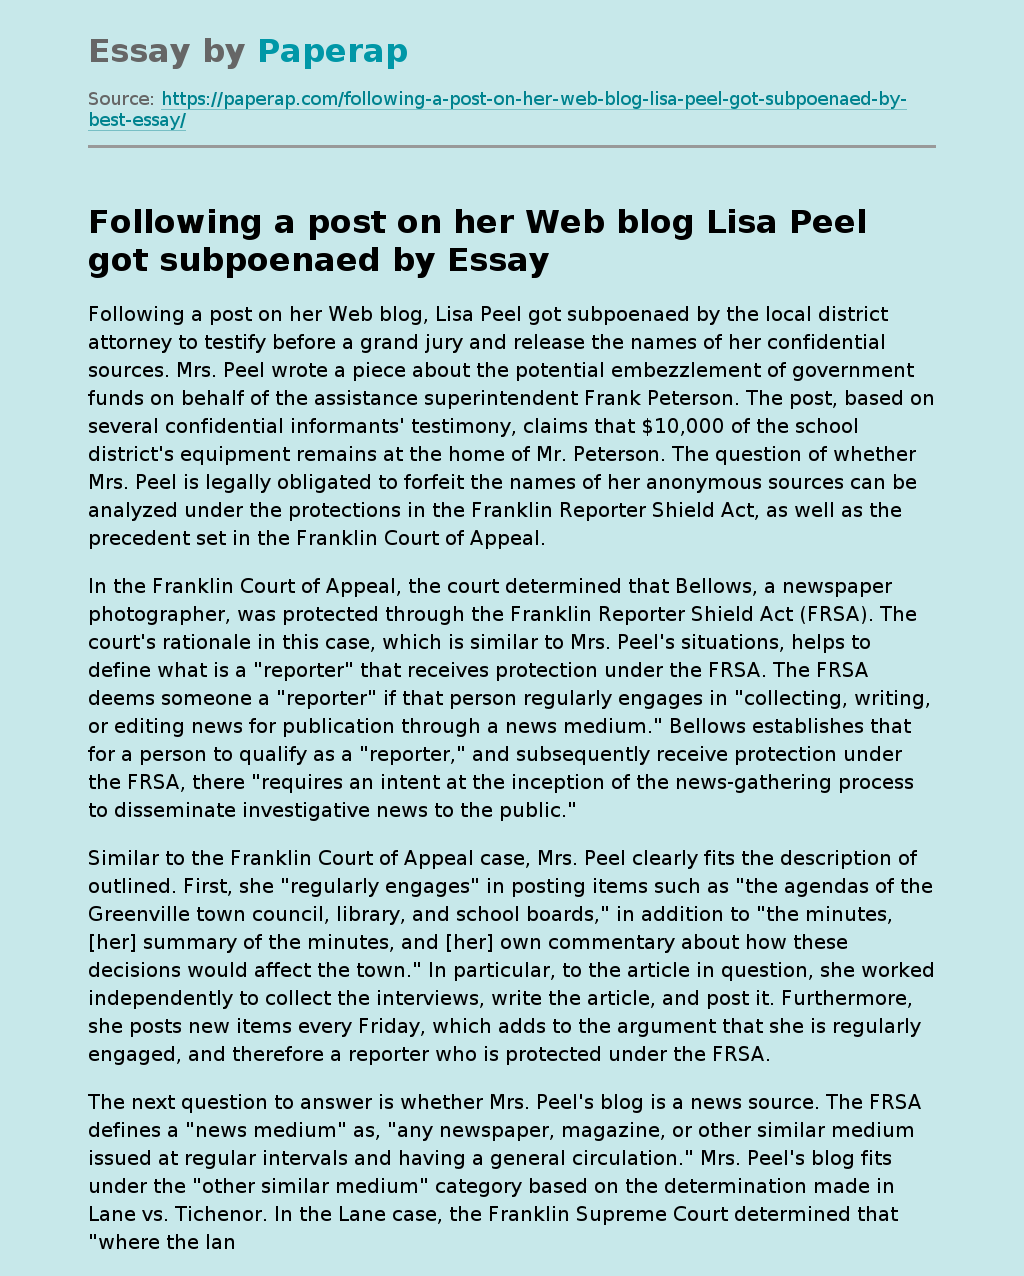 Following a post on her Web blog Lisa Peel got subpoenaed by